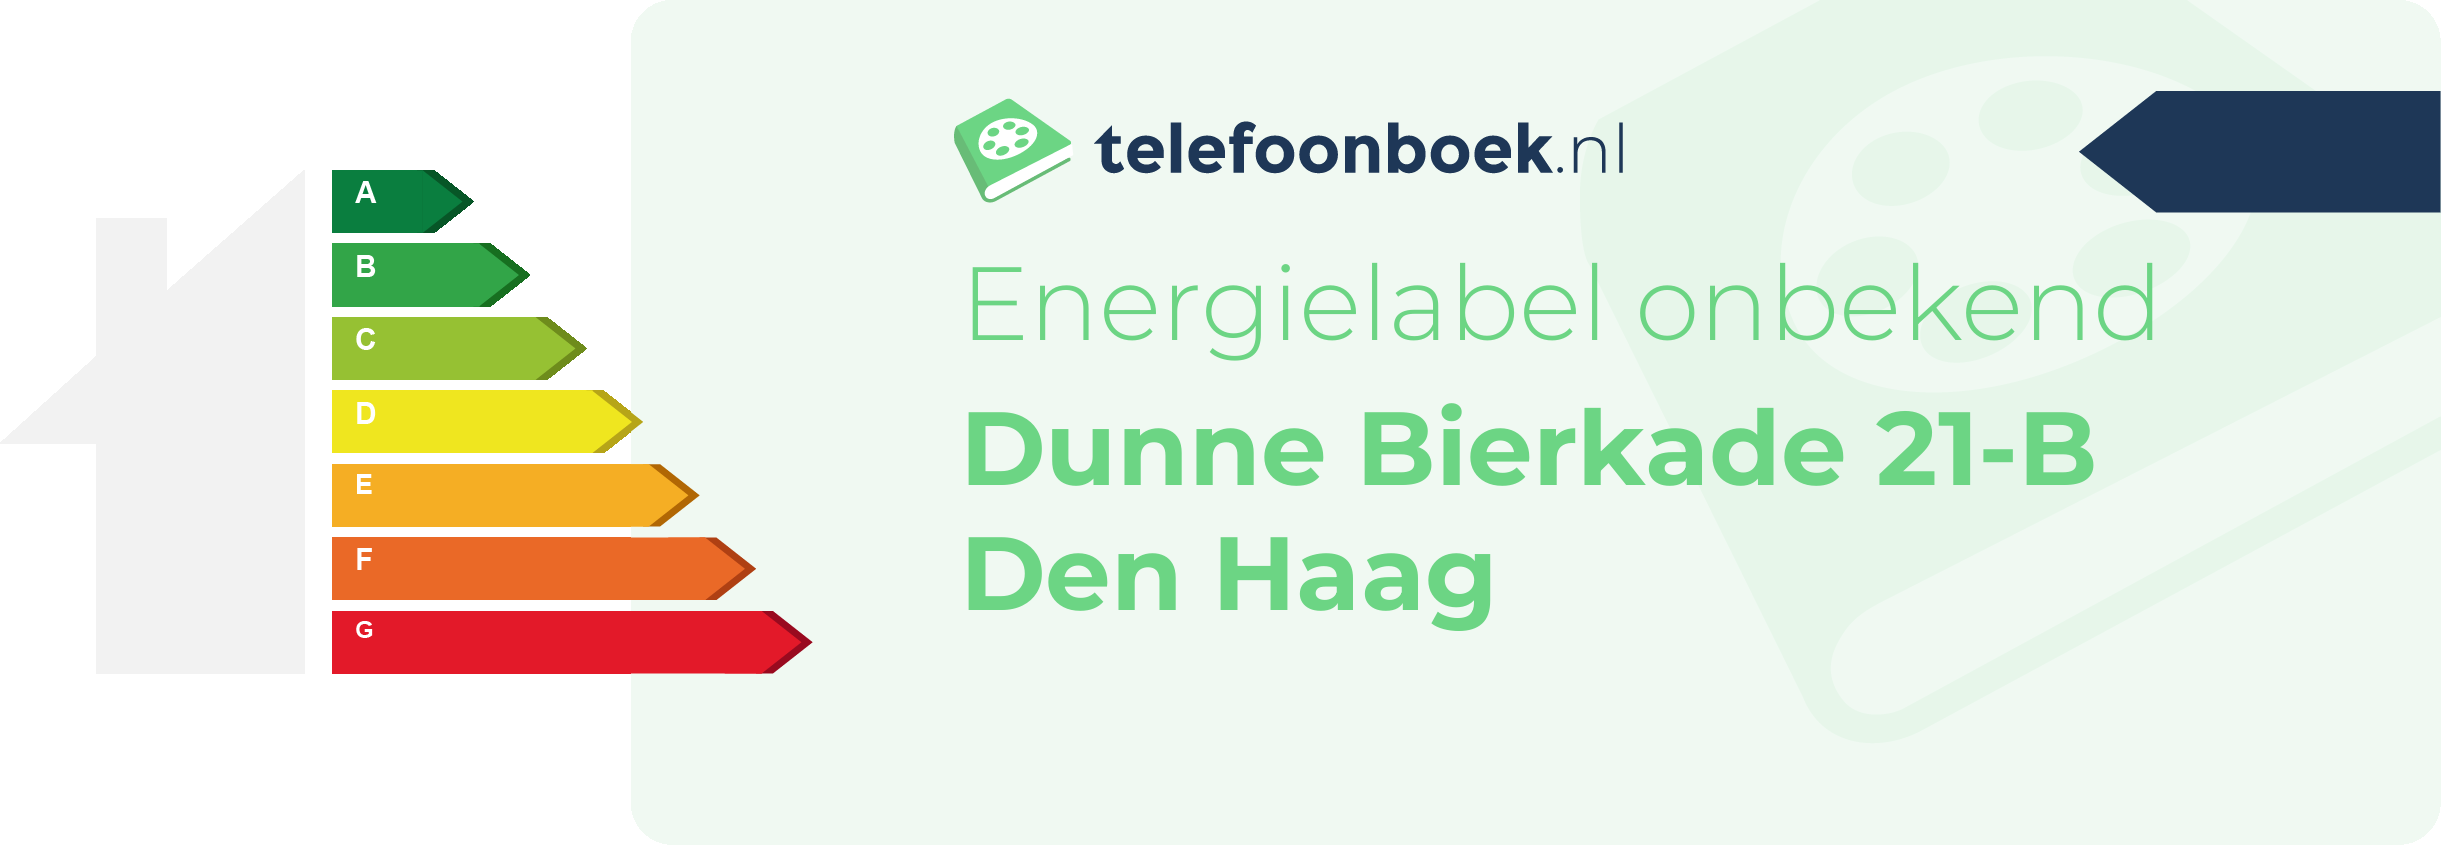 Energielabel Dunne Bierkade 21-B Den Haag